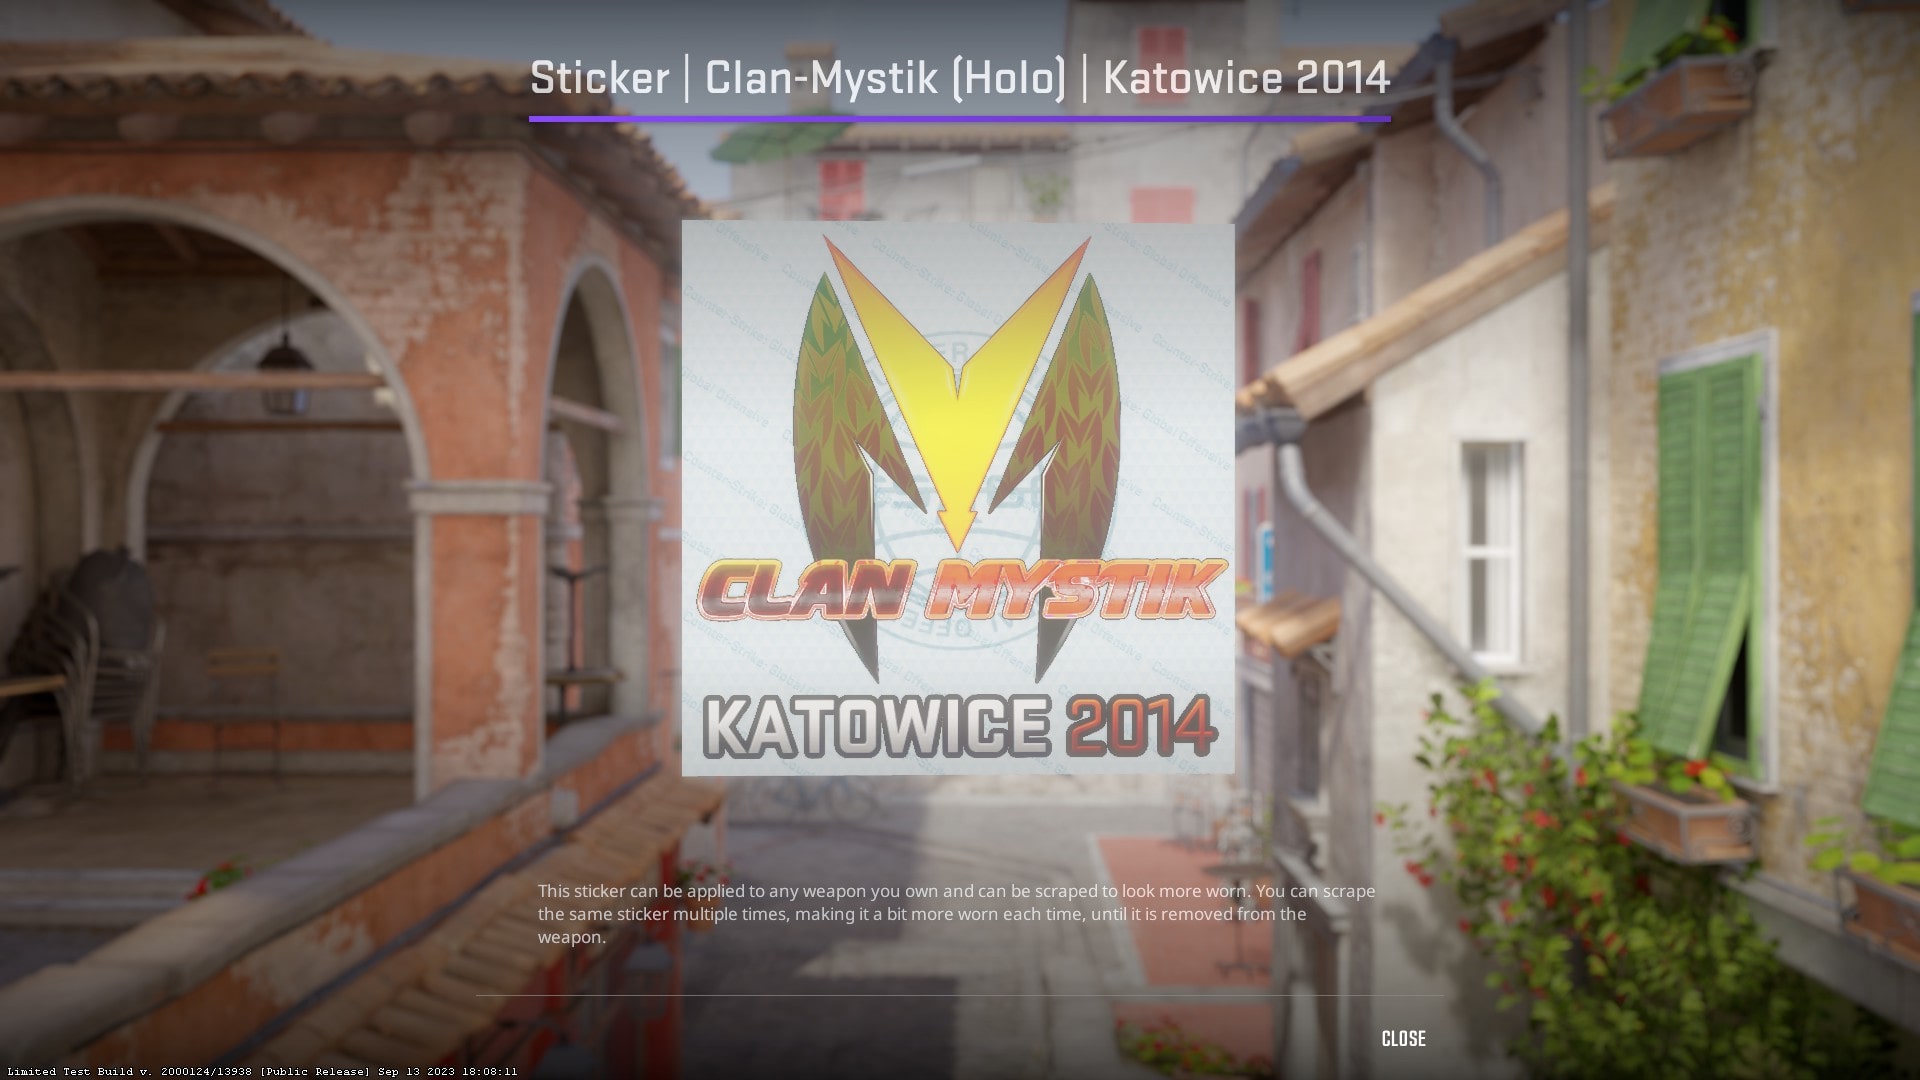 Sticker Clan-Mystik (Holo) Katowice 2014 Current Price